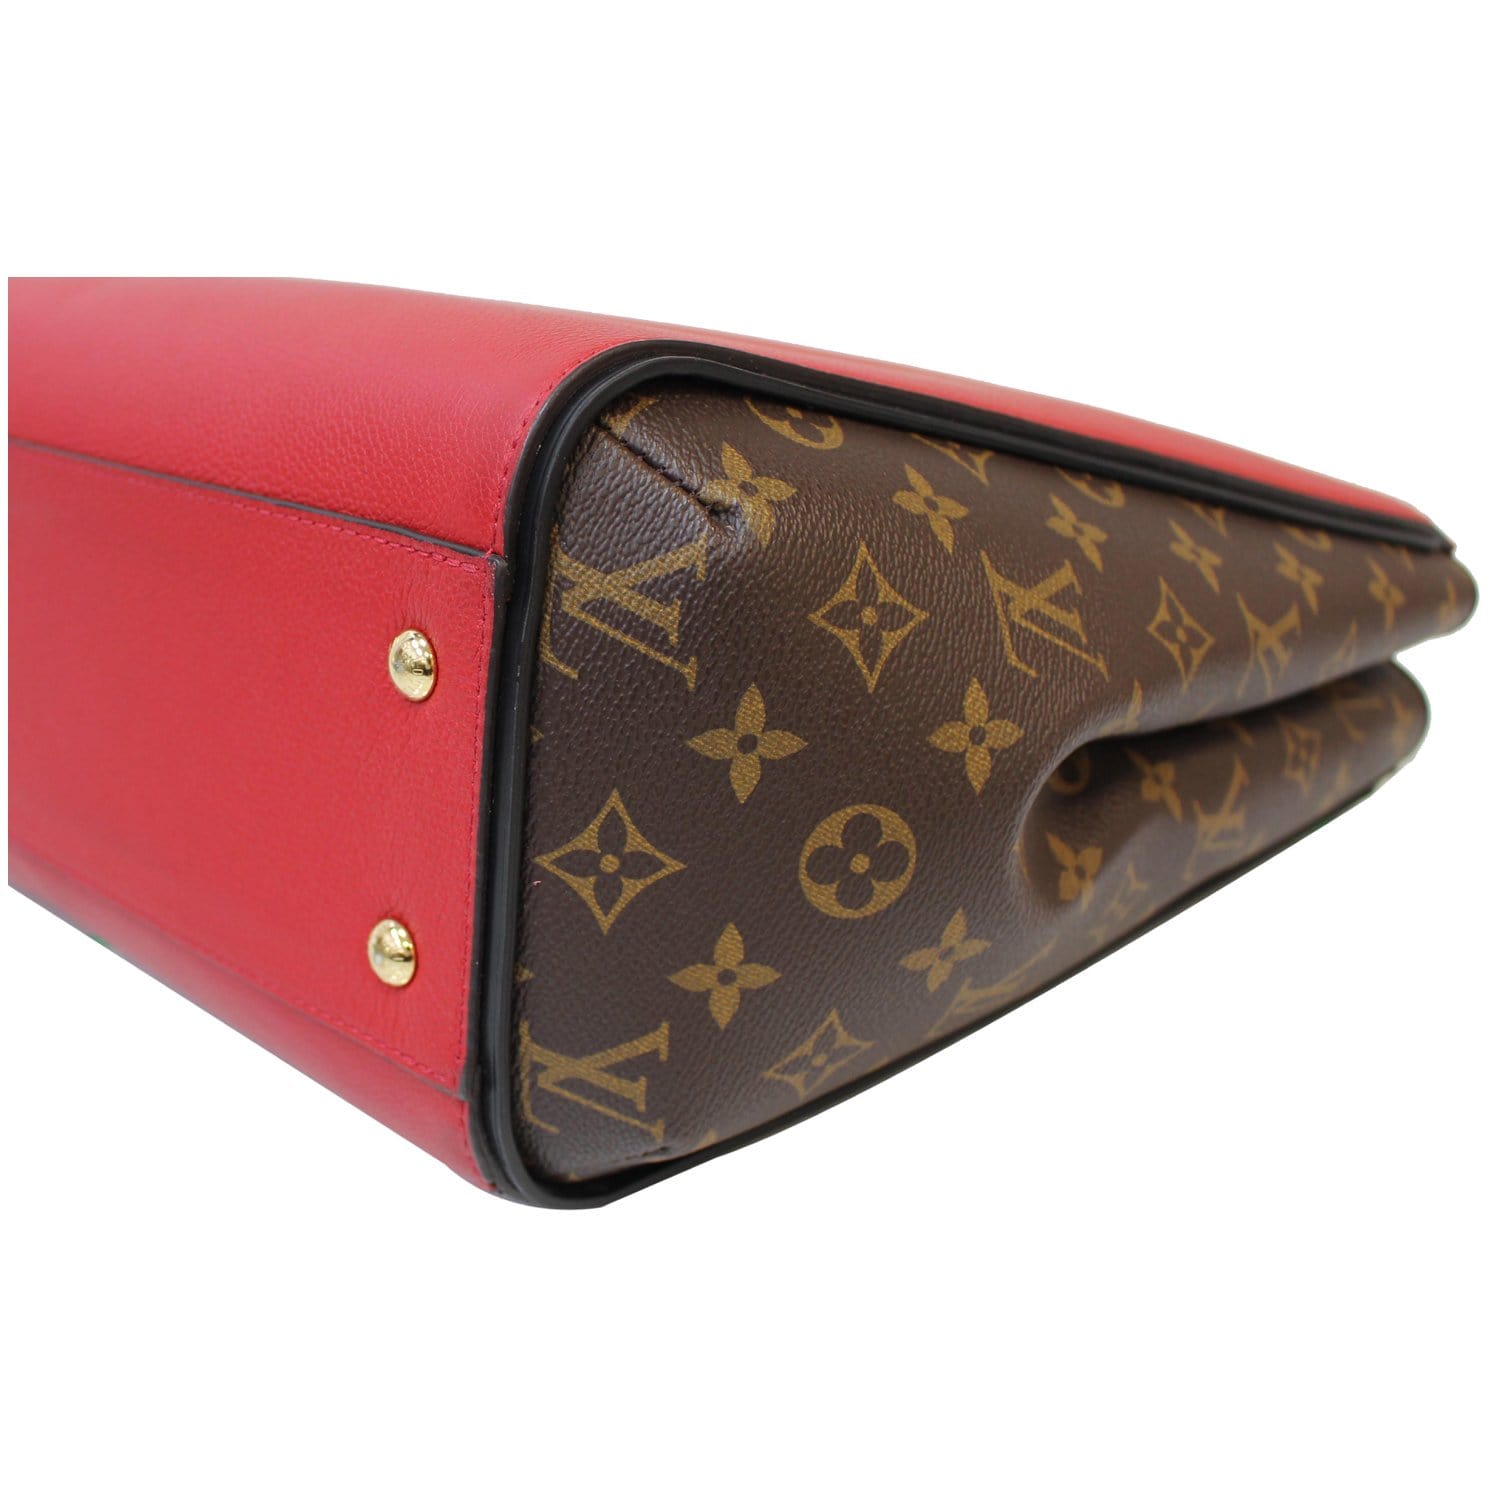 Louis Vuitton - Authenticated Kimono Handbag - Leather Brown Plain for Women, Very Good Condition